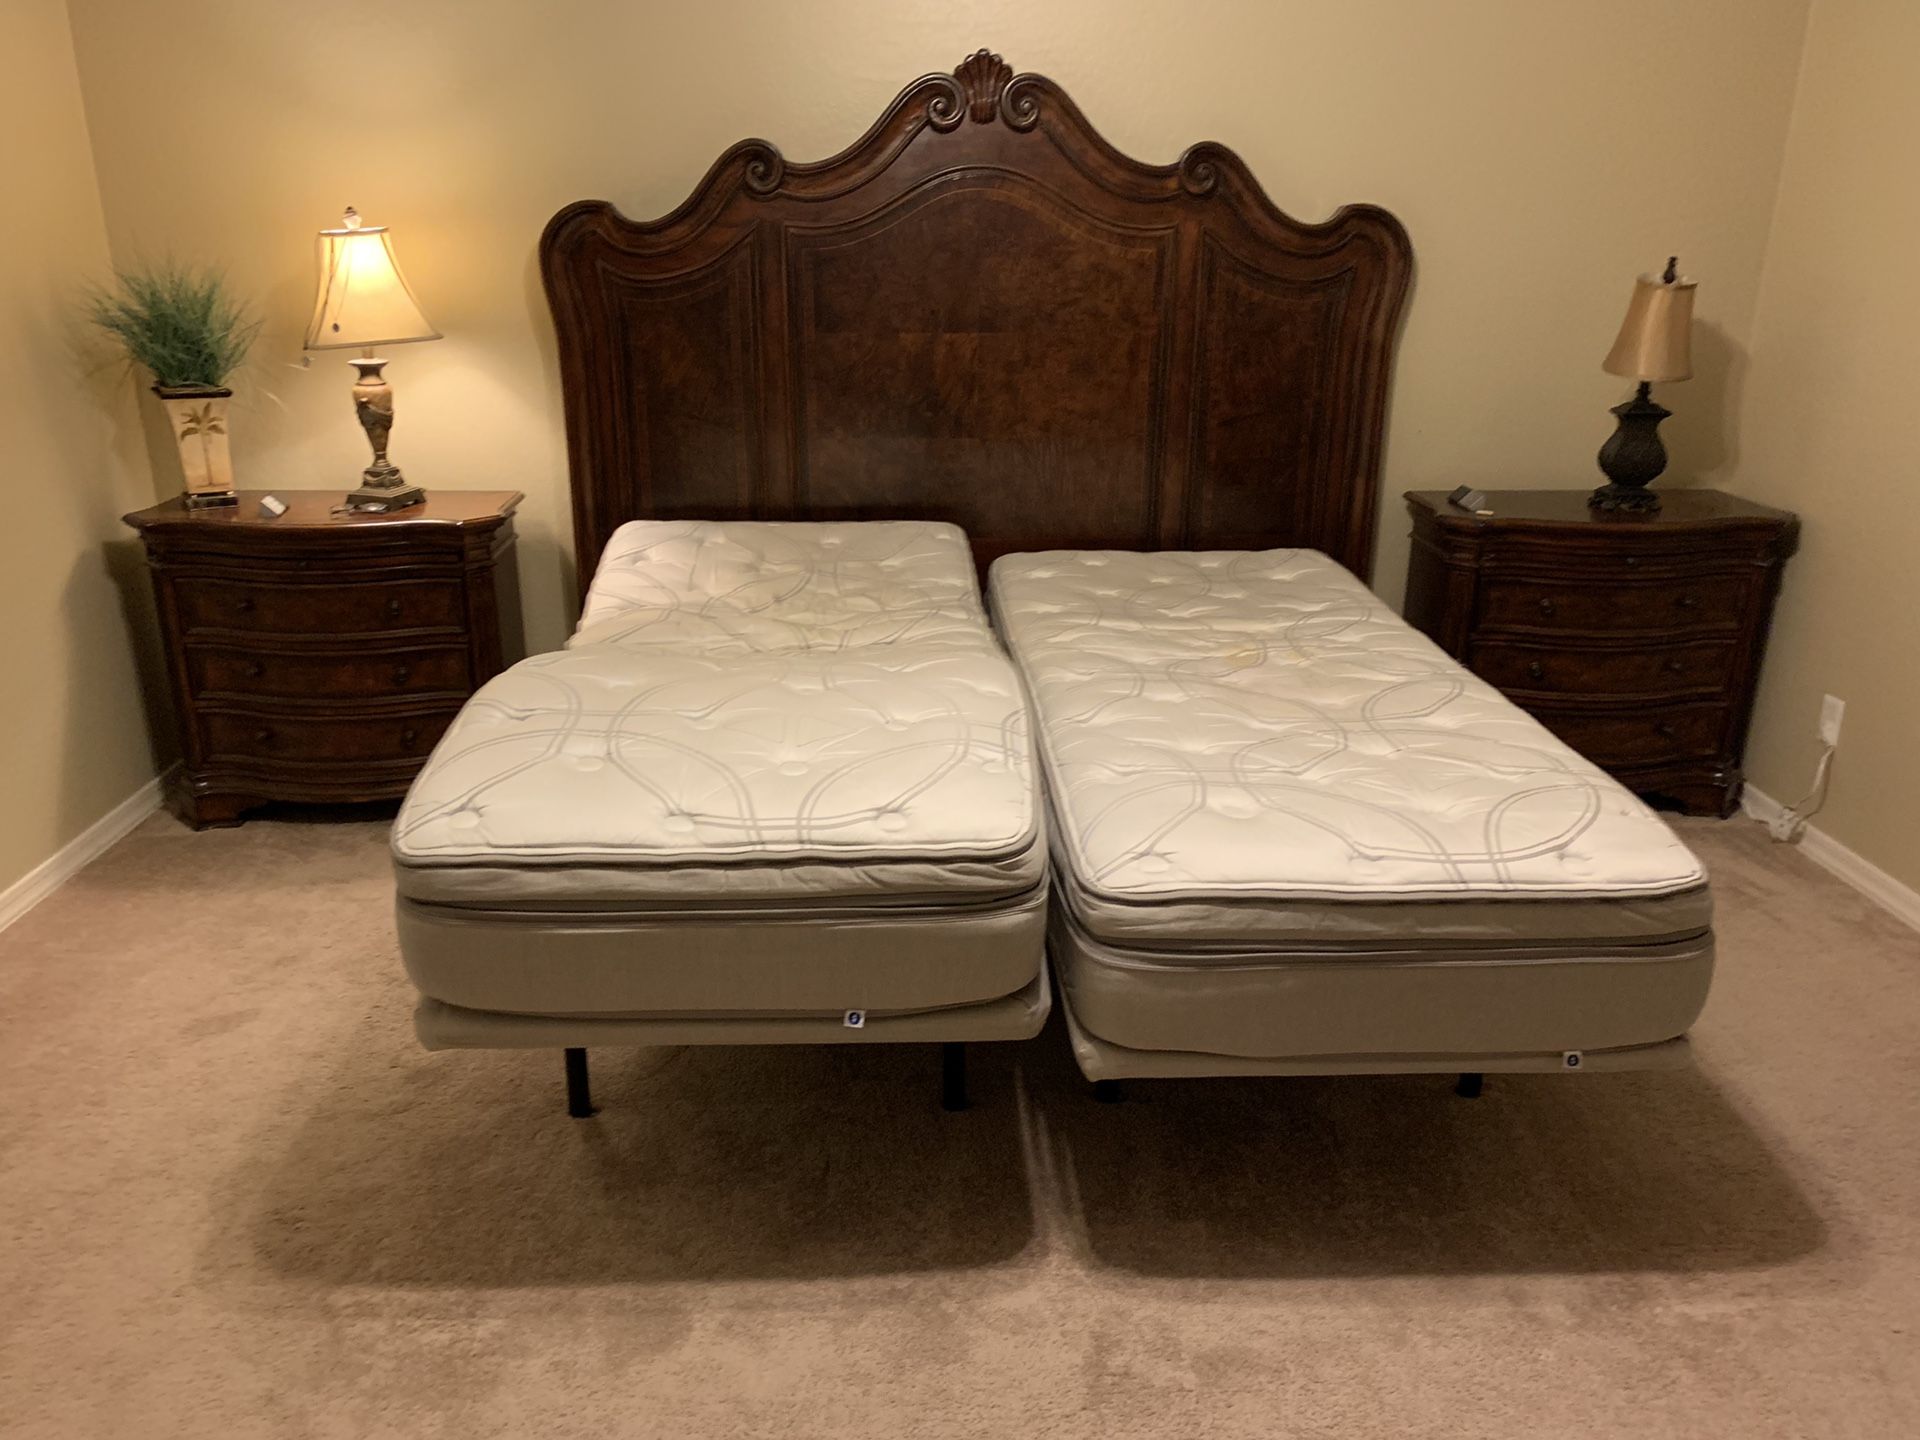 Sleep Number i8 California King split mattress with Flex Fit 2 adjustable base, 1/2 price vs. new